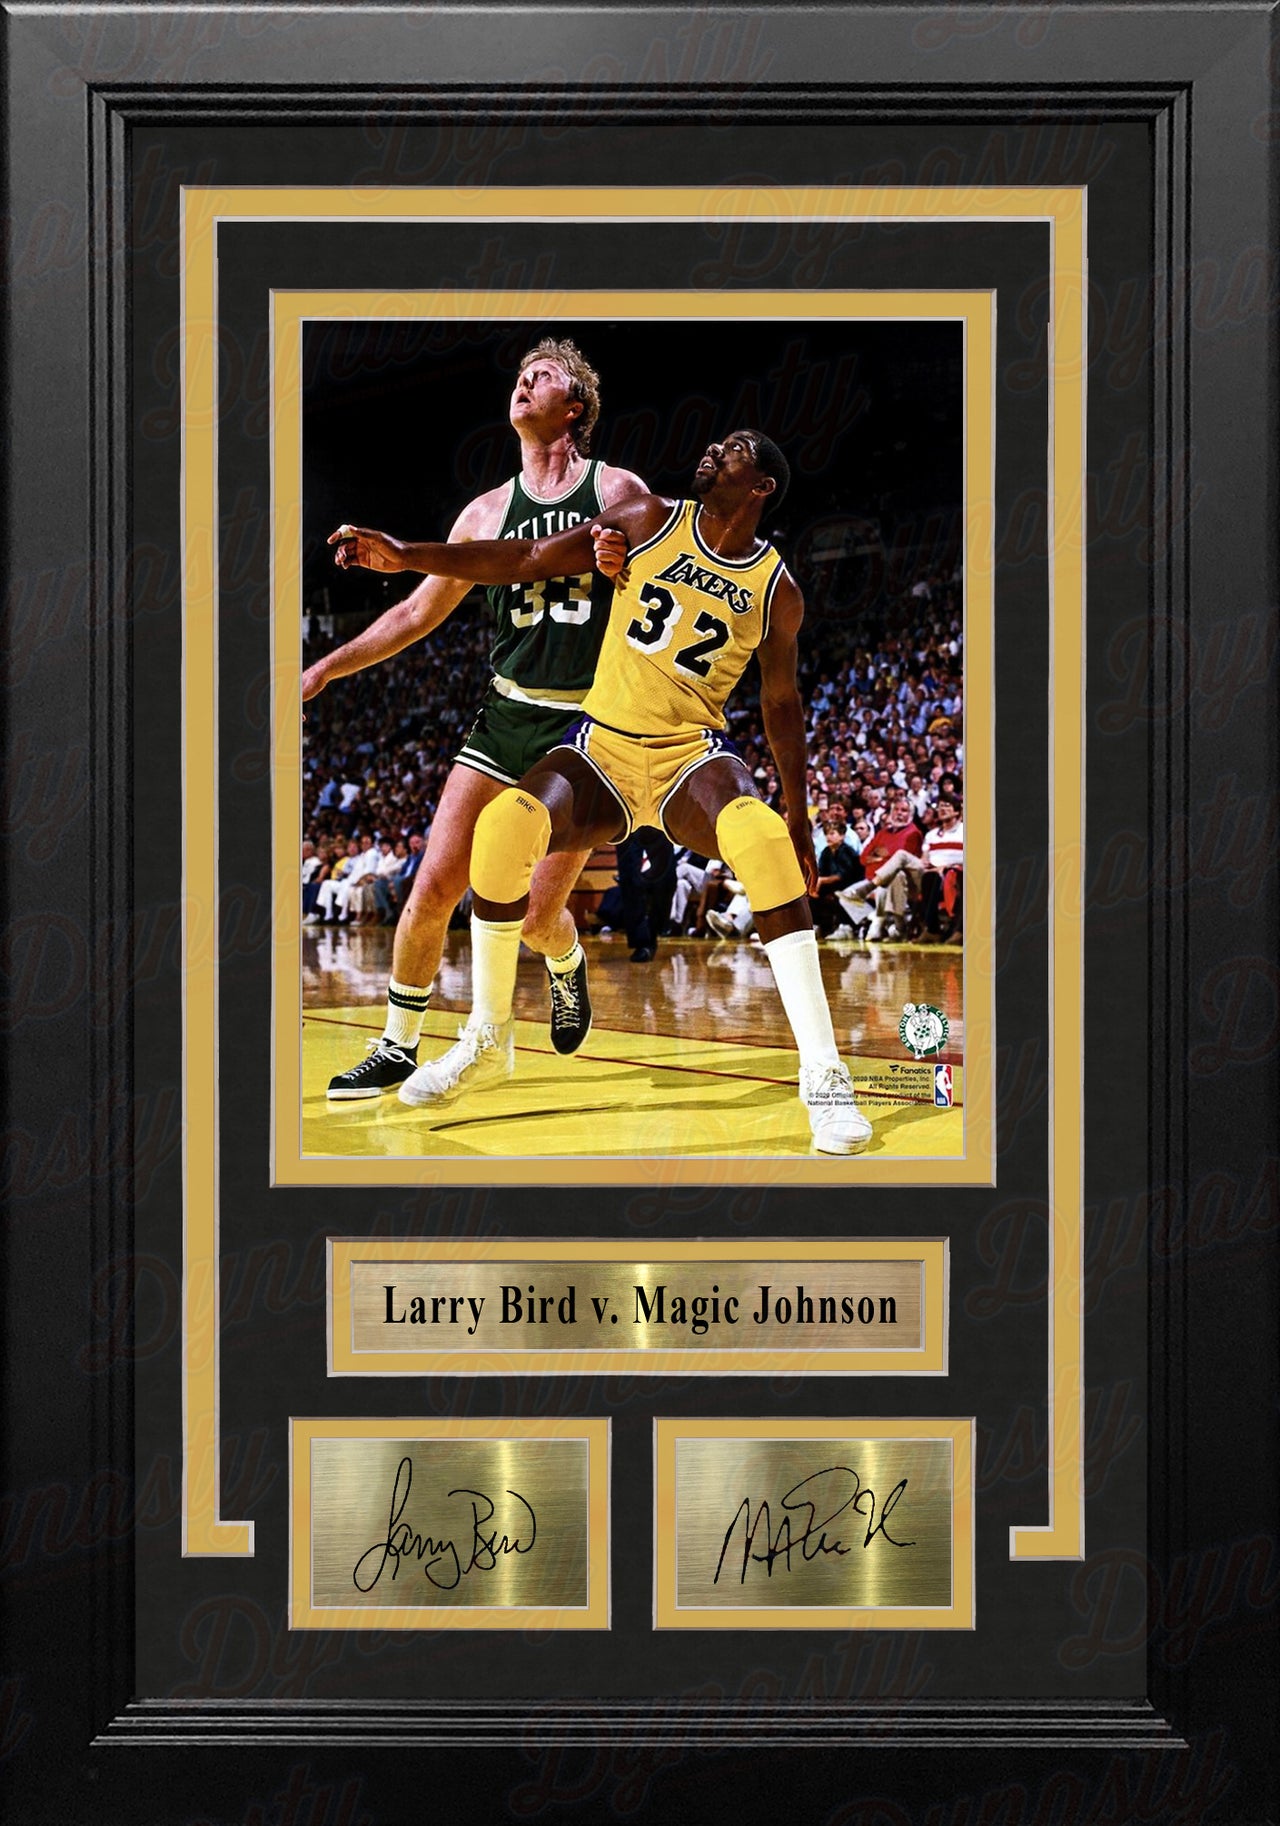 Larry Bird v. Magic Johnson 8" x 10" Framed Basketball Photo with Engraved Autographs - Dynasty Sports & Framing 